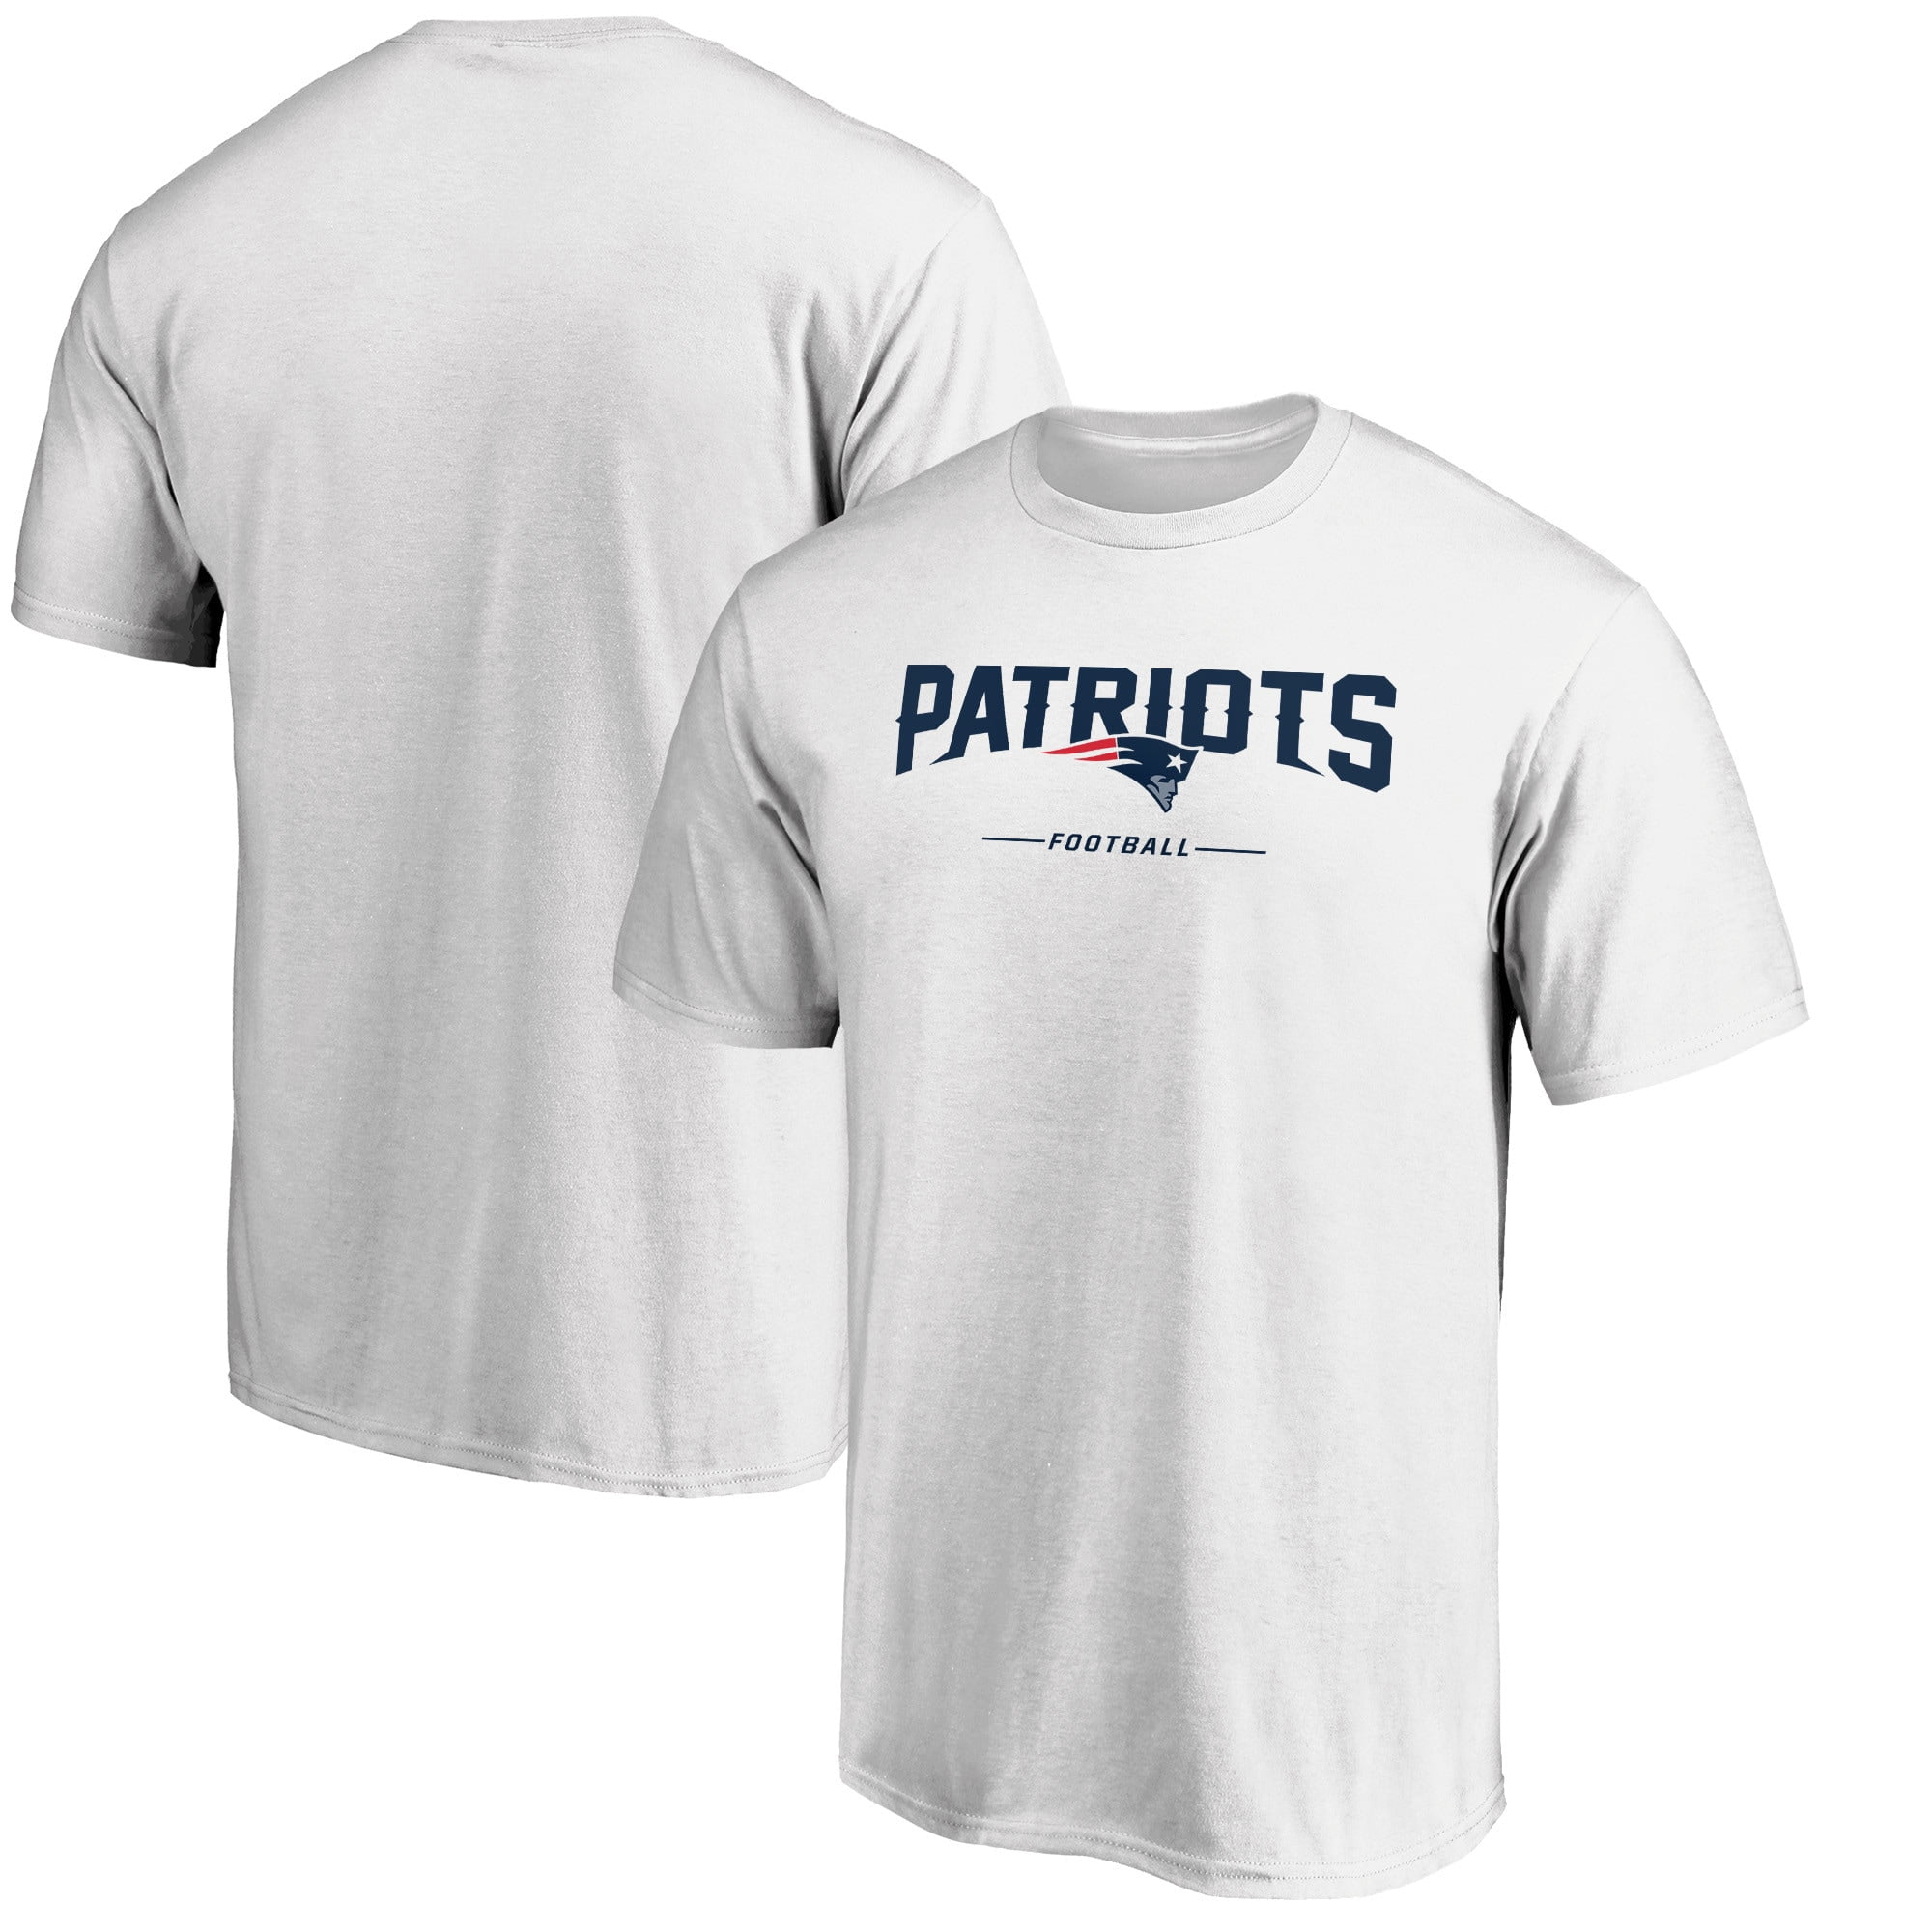 patriots football t shirt